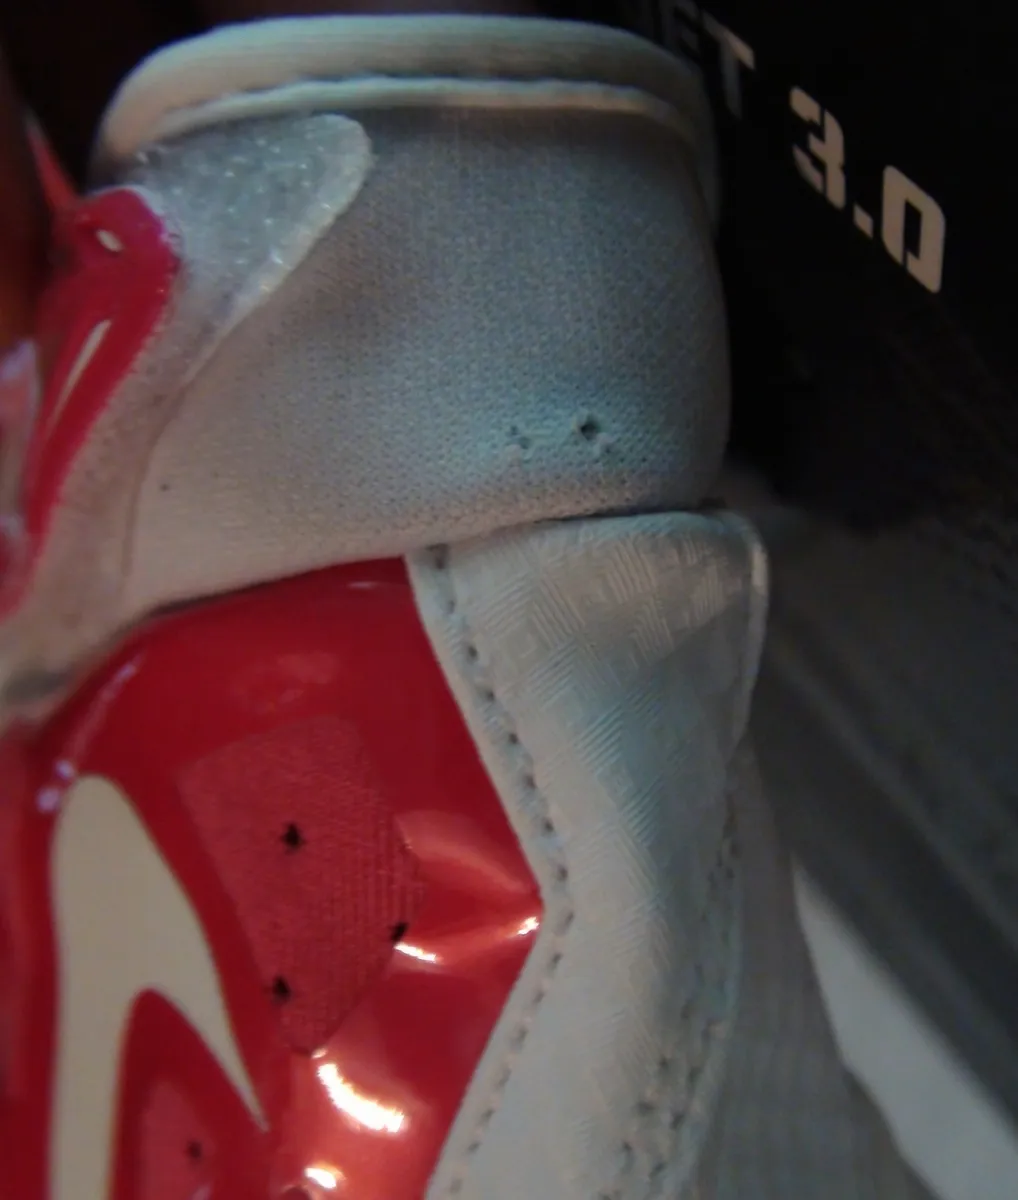 Nike Vapor Jet 3.0 Football Gloves Pink White Size S